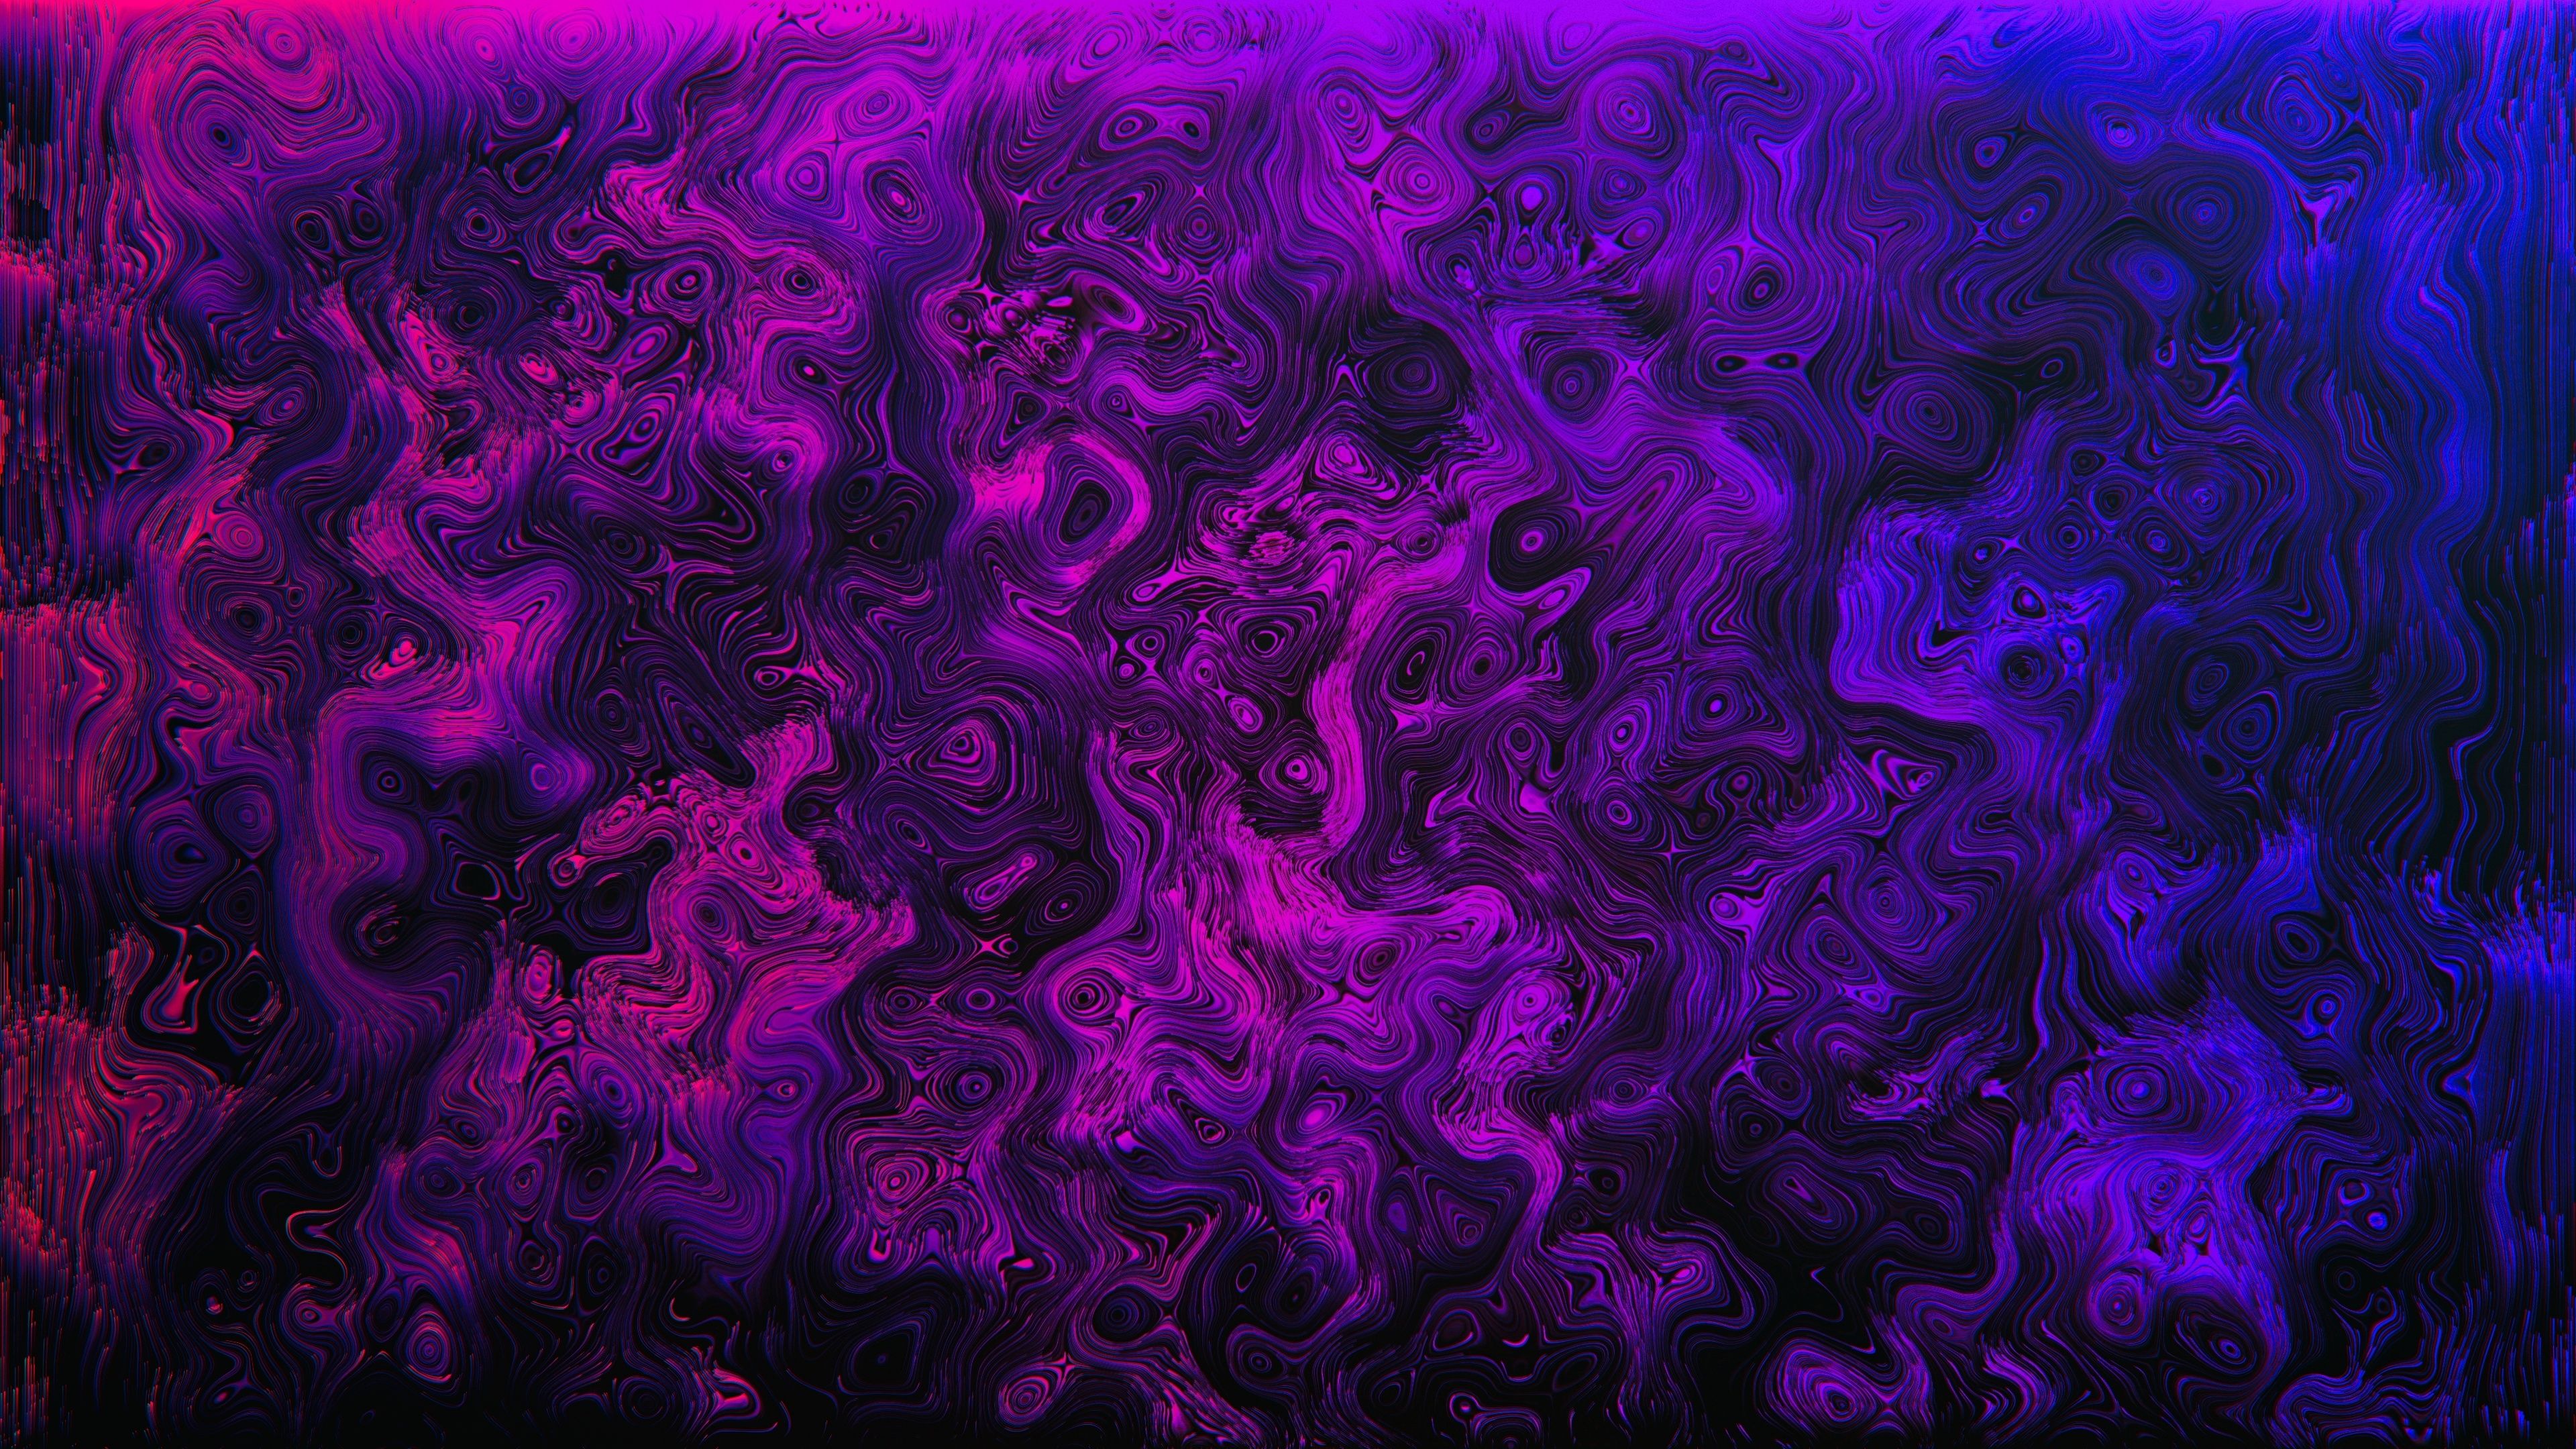 Download wallpaper 3840x2160 pink and purple, texture, abstract 4k wallpaper, uhd wallpaper, 16:9 widescreen 3840x2160 HD background, 16472